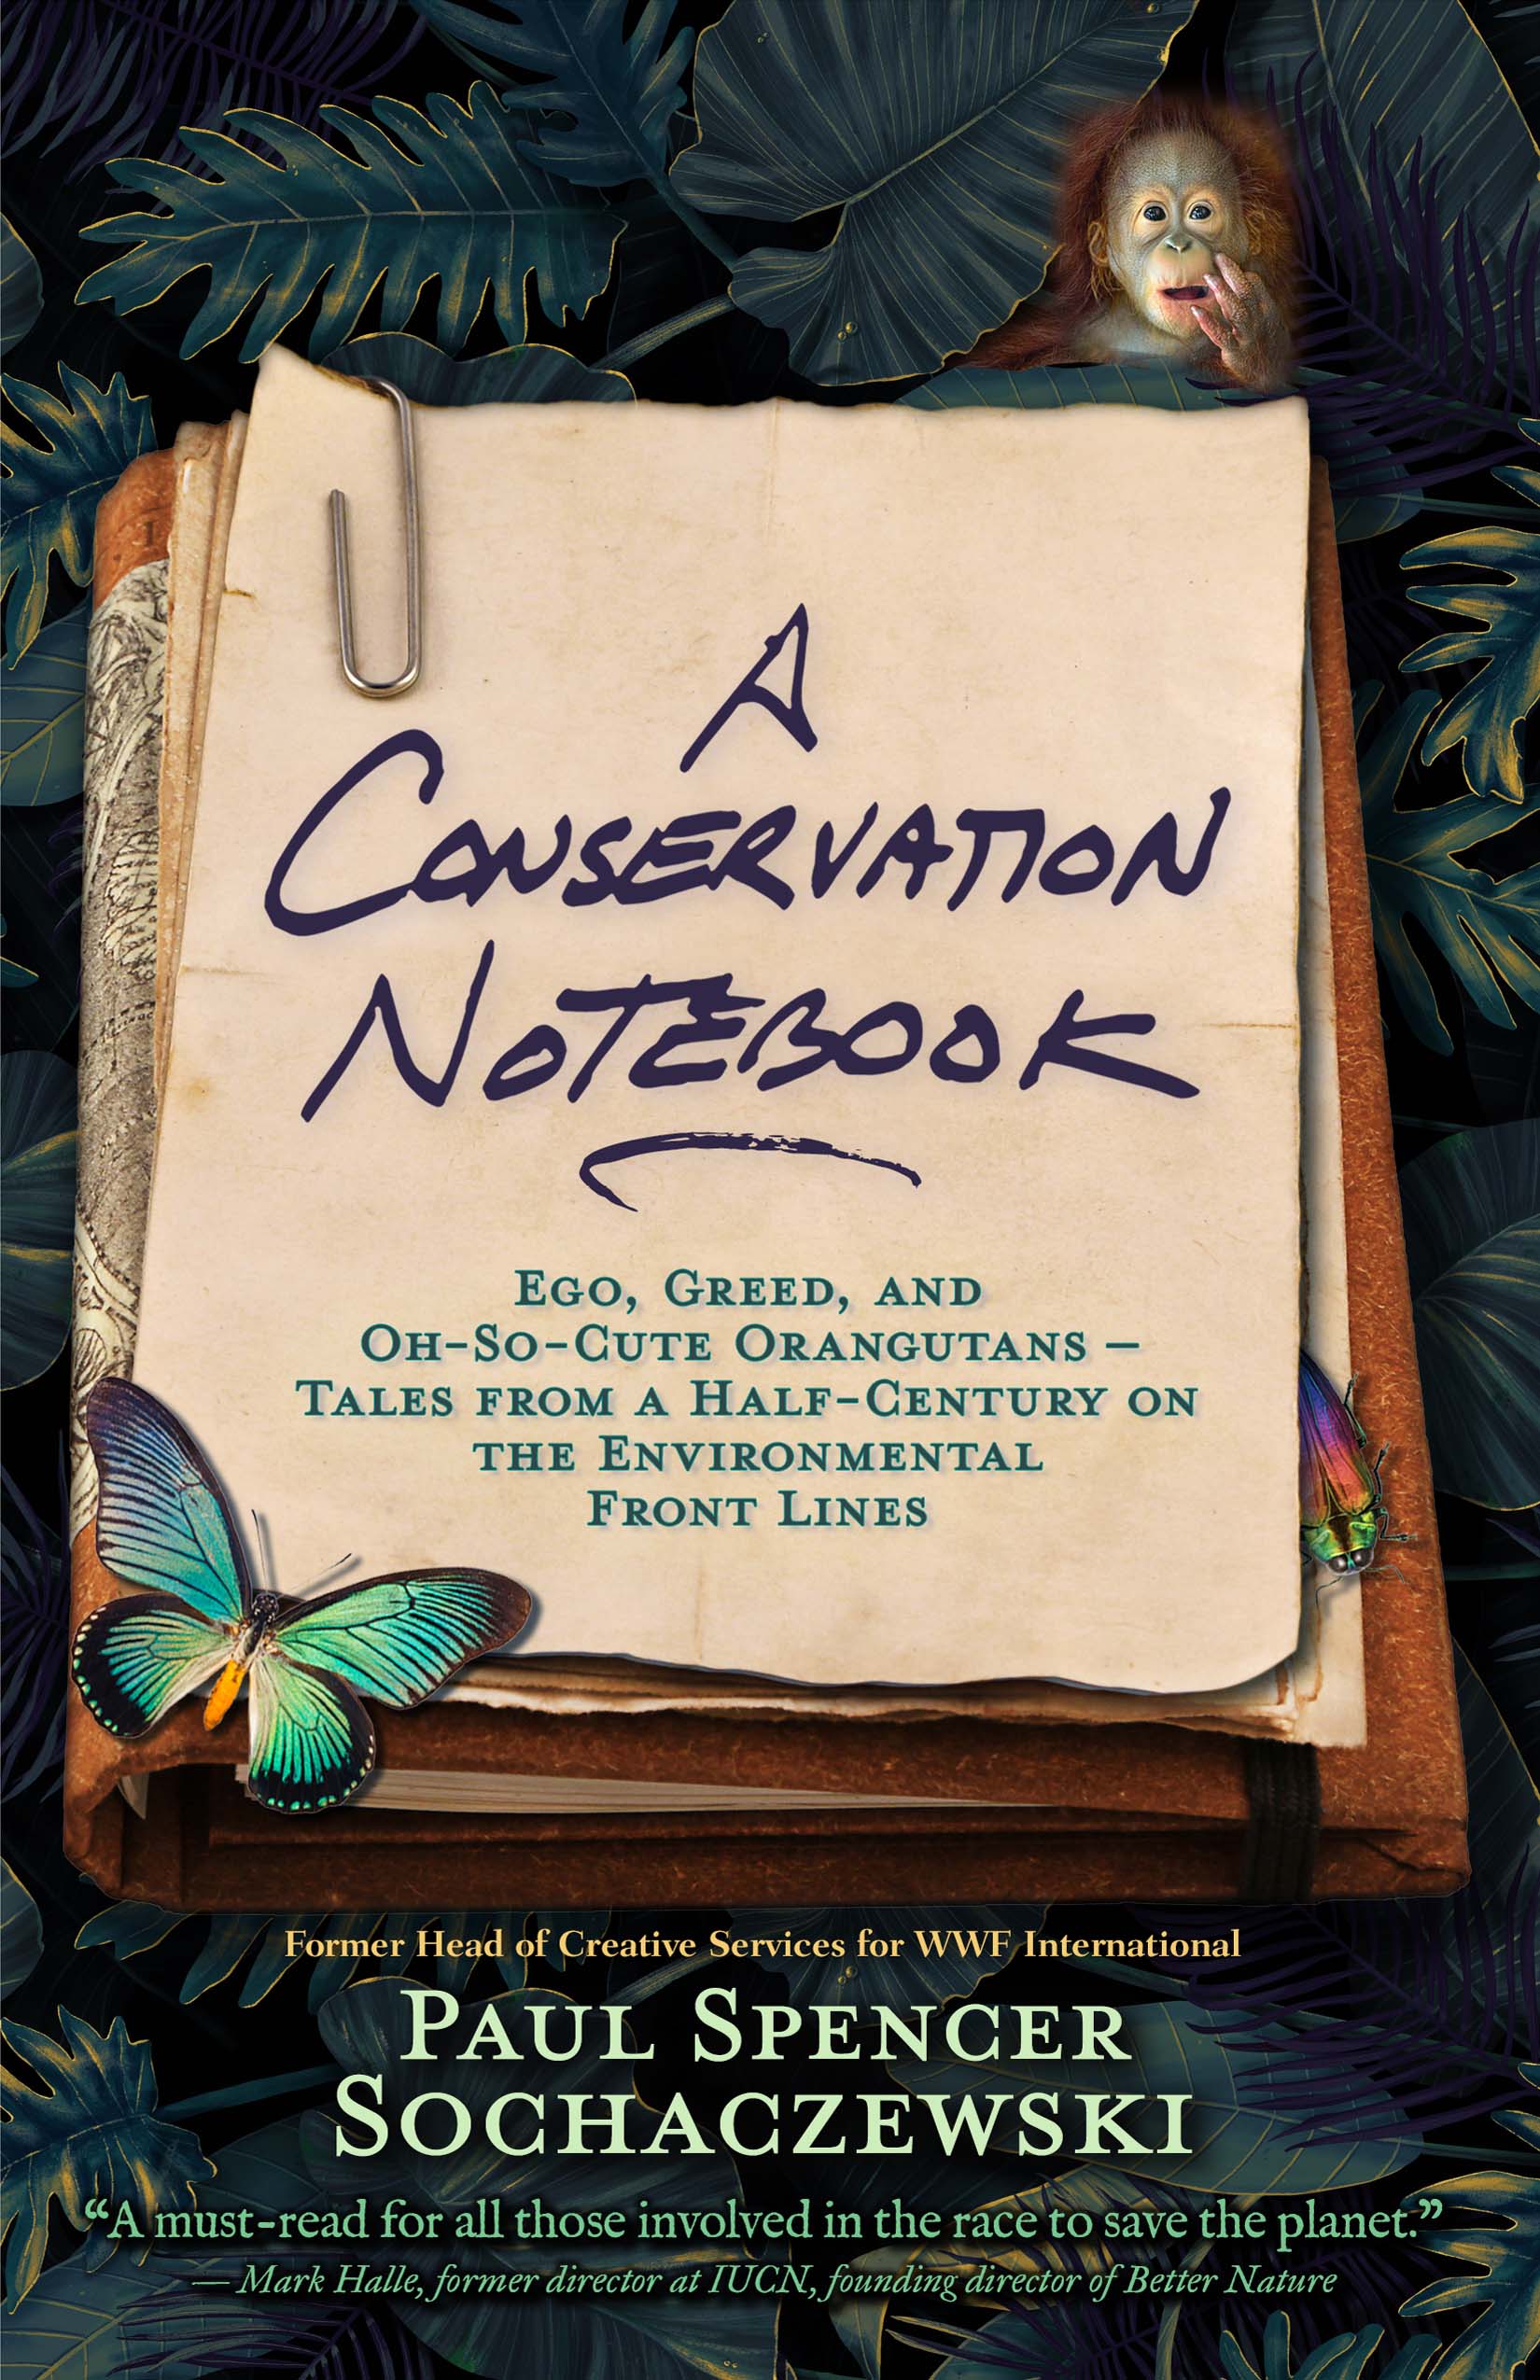 Download A Conservation Notebook PDF by Paul Spencer Sochaczewski